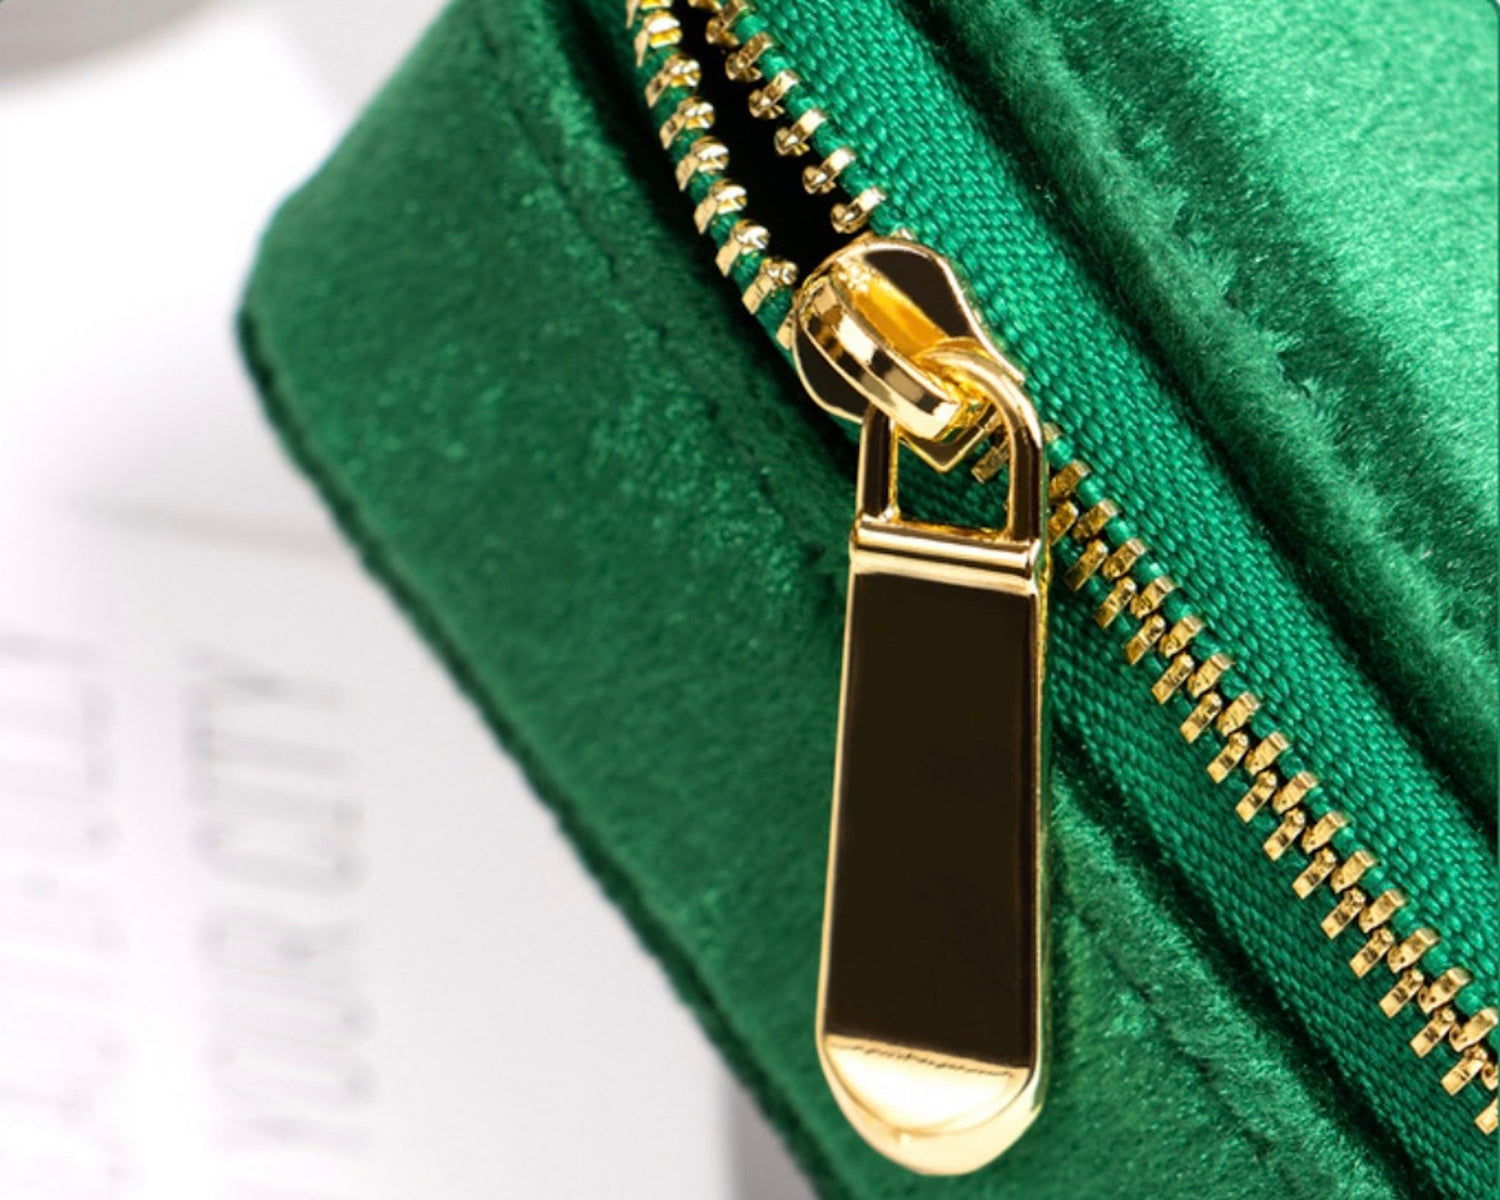 Vintage inspired velvet travel jewelry box-Emerald green-duel boxes